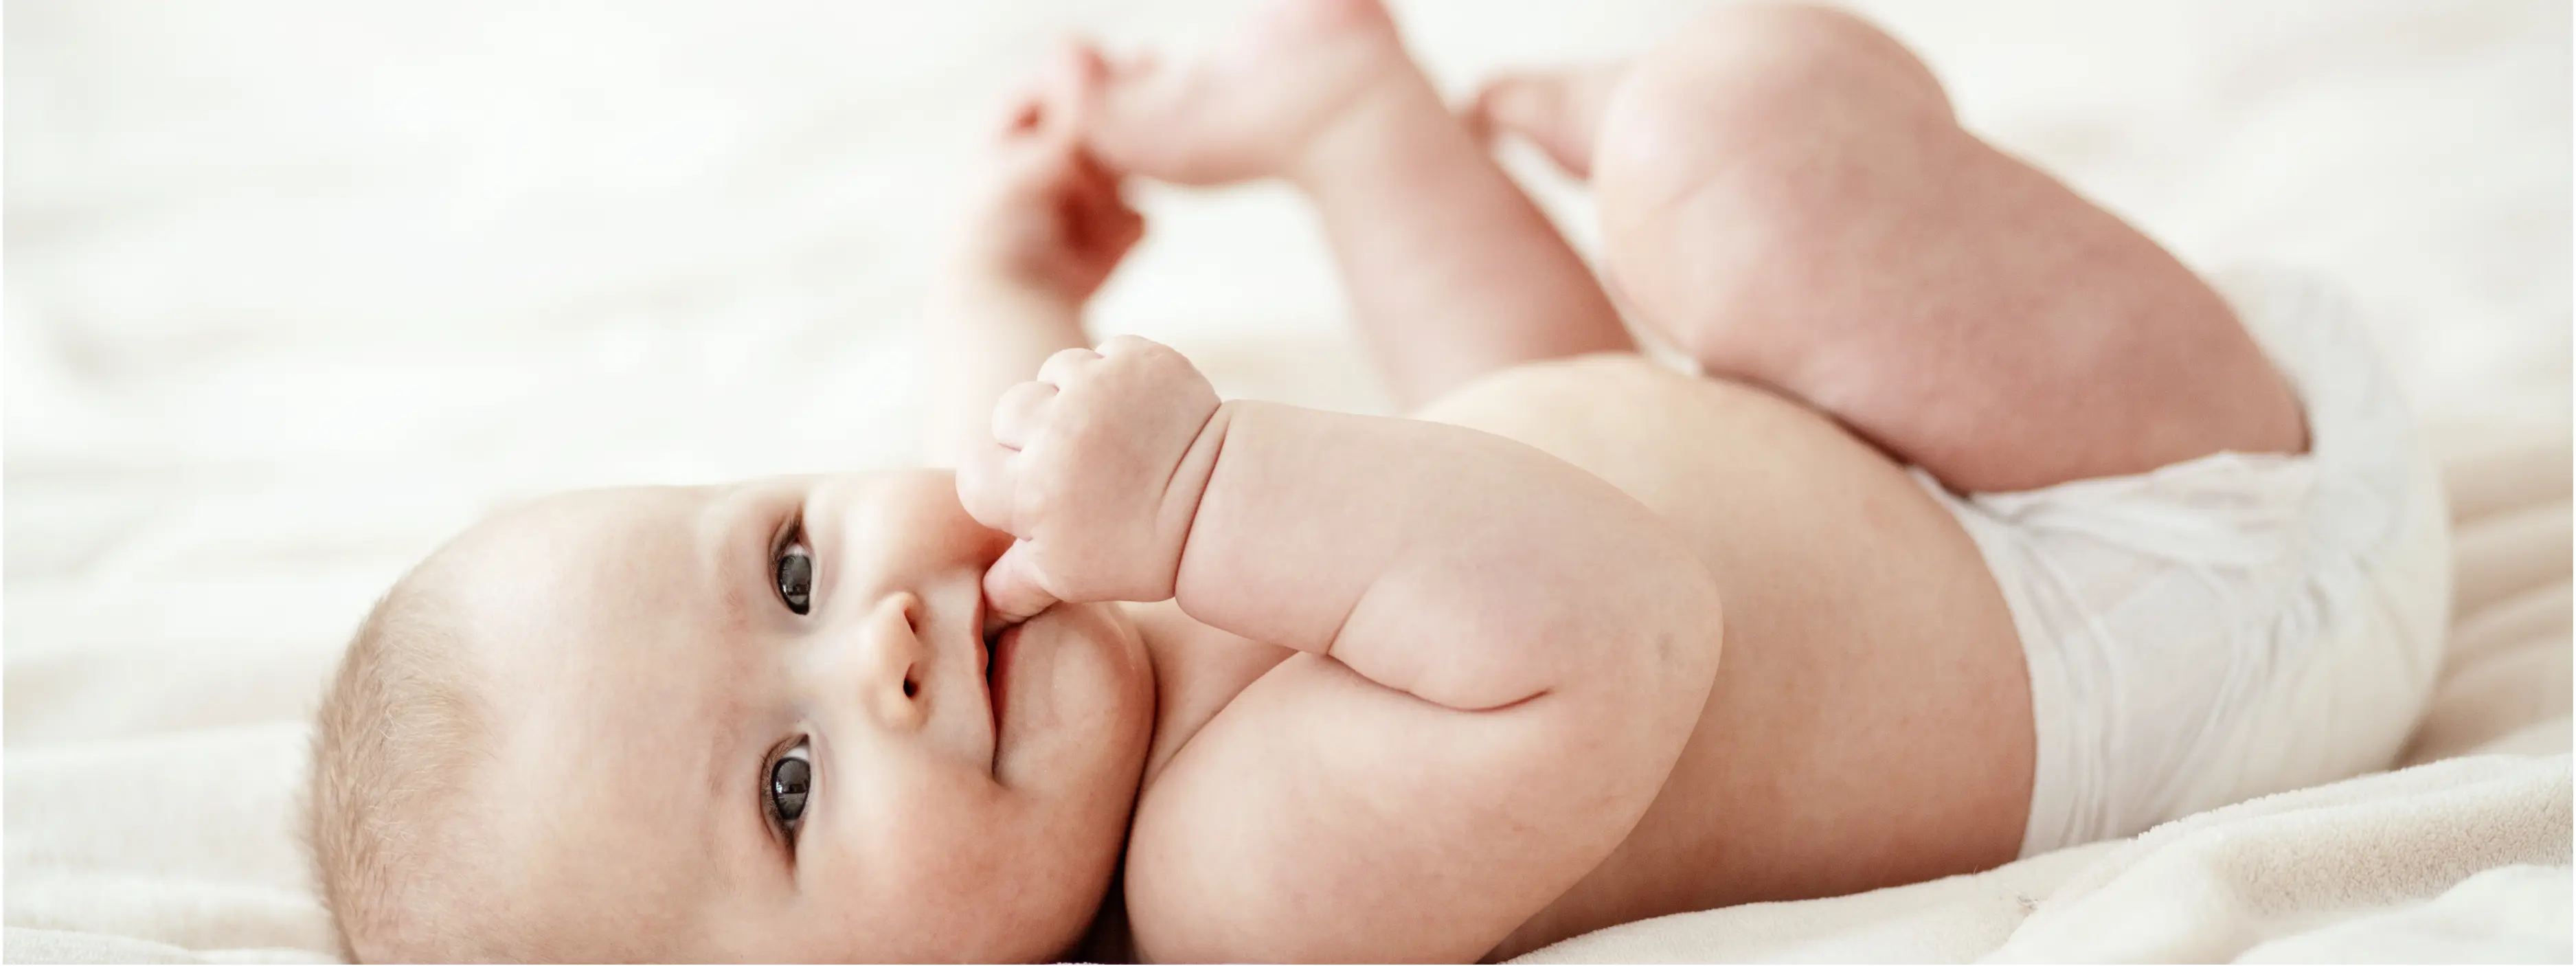 Understanding and Managing Developmental Dysplasia of the Hips in Infants